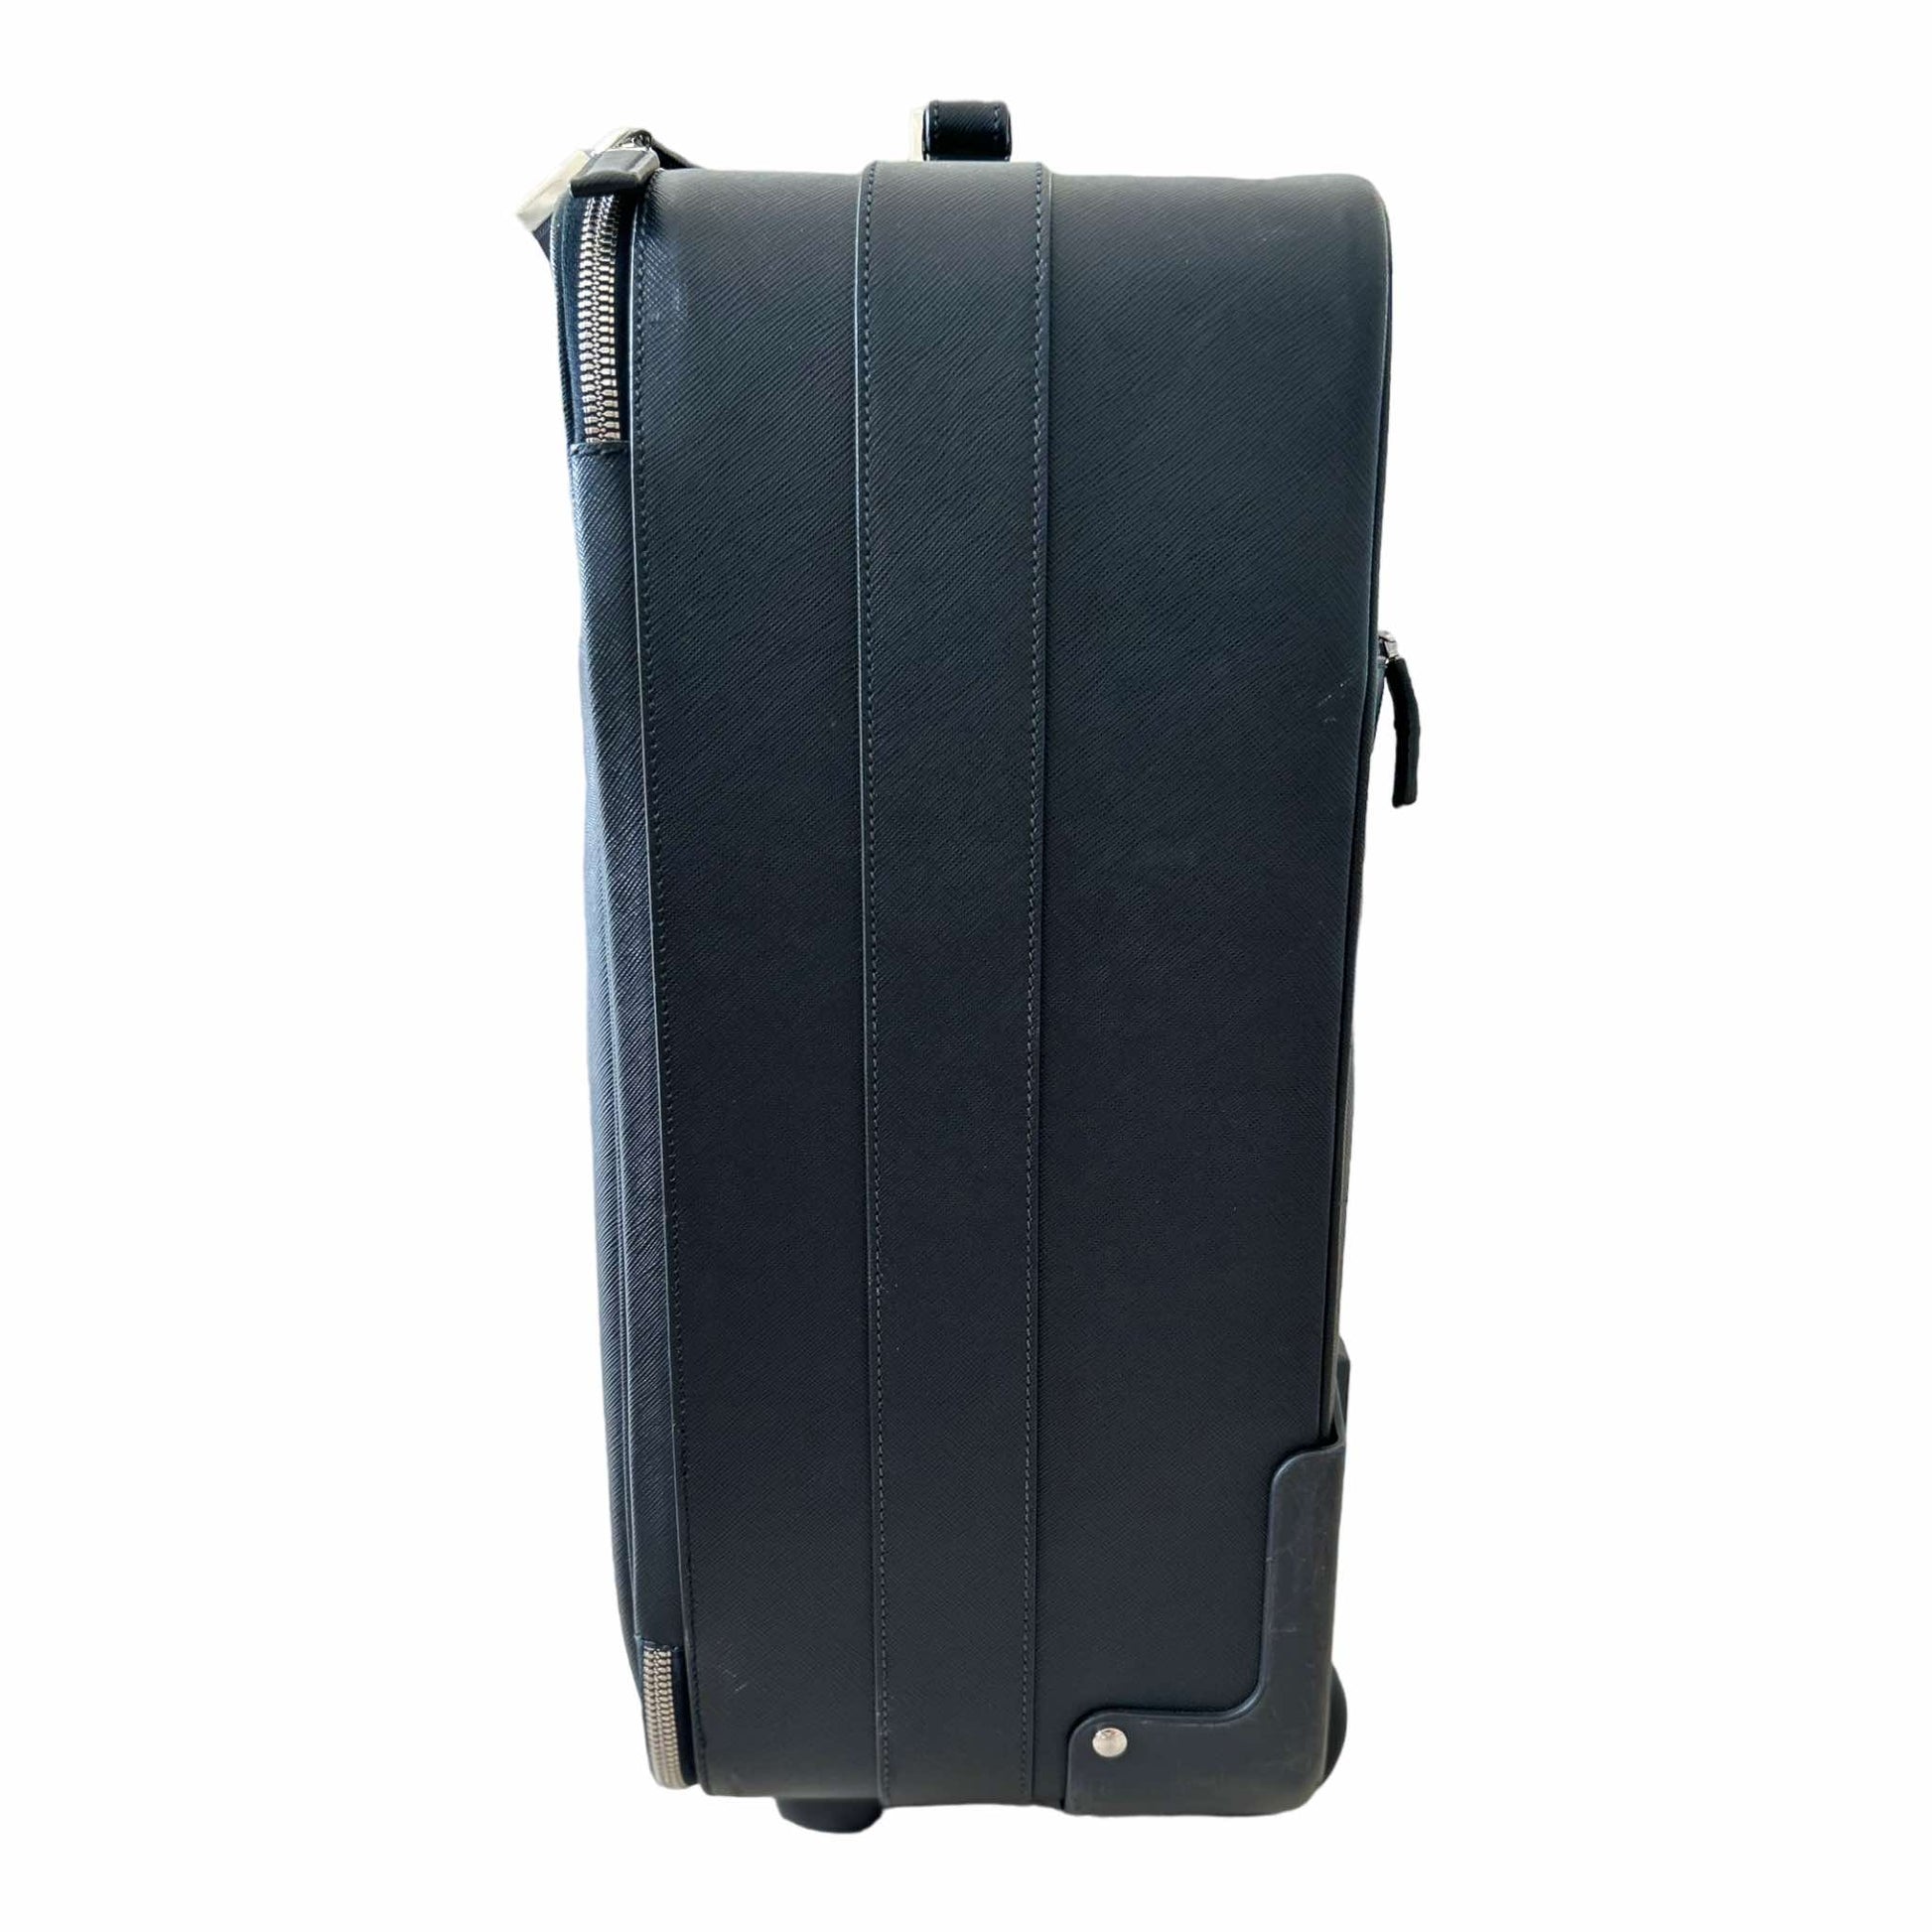 Prada Saffiano Leather Rolling Carry-On Suitcase